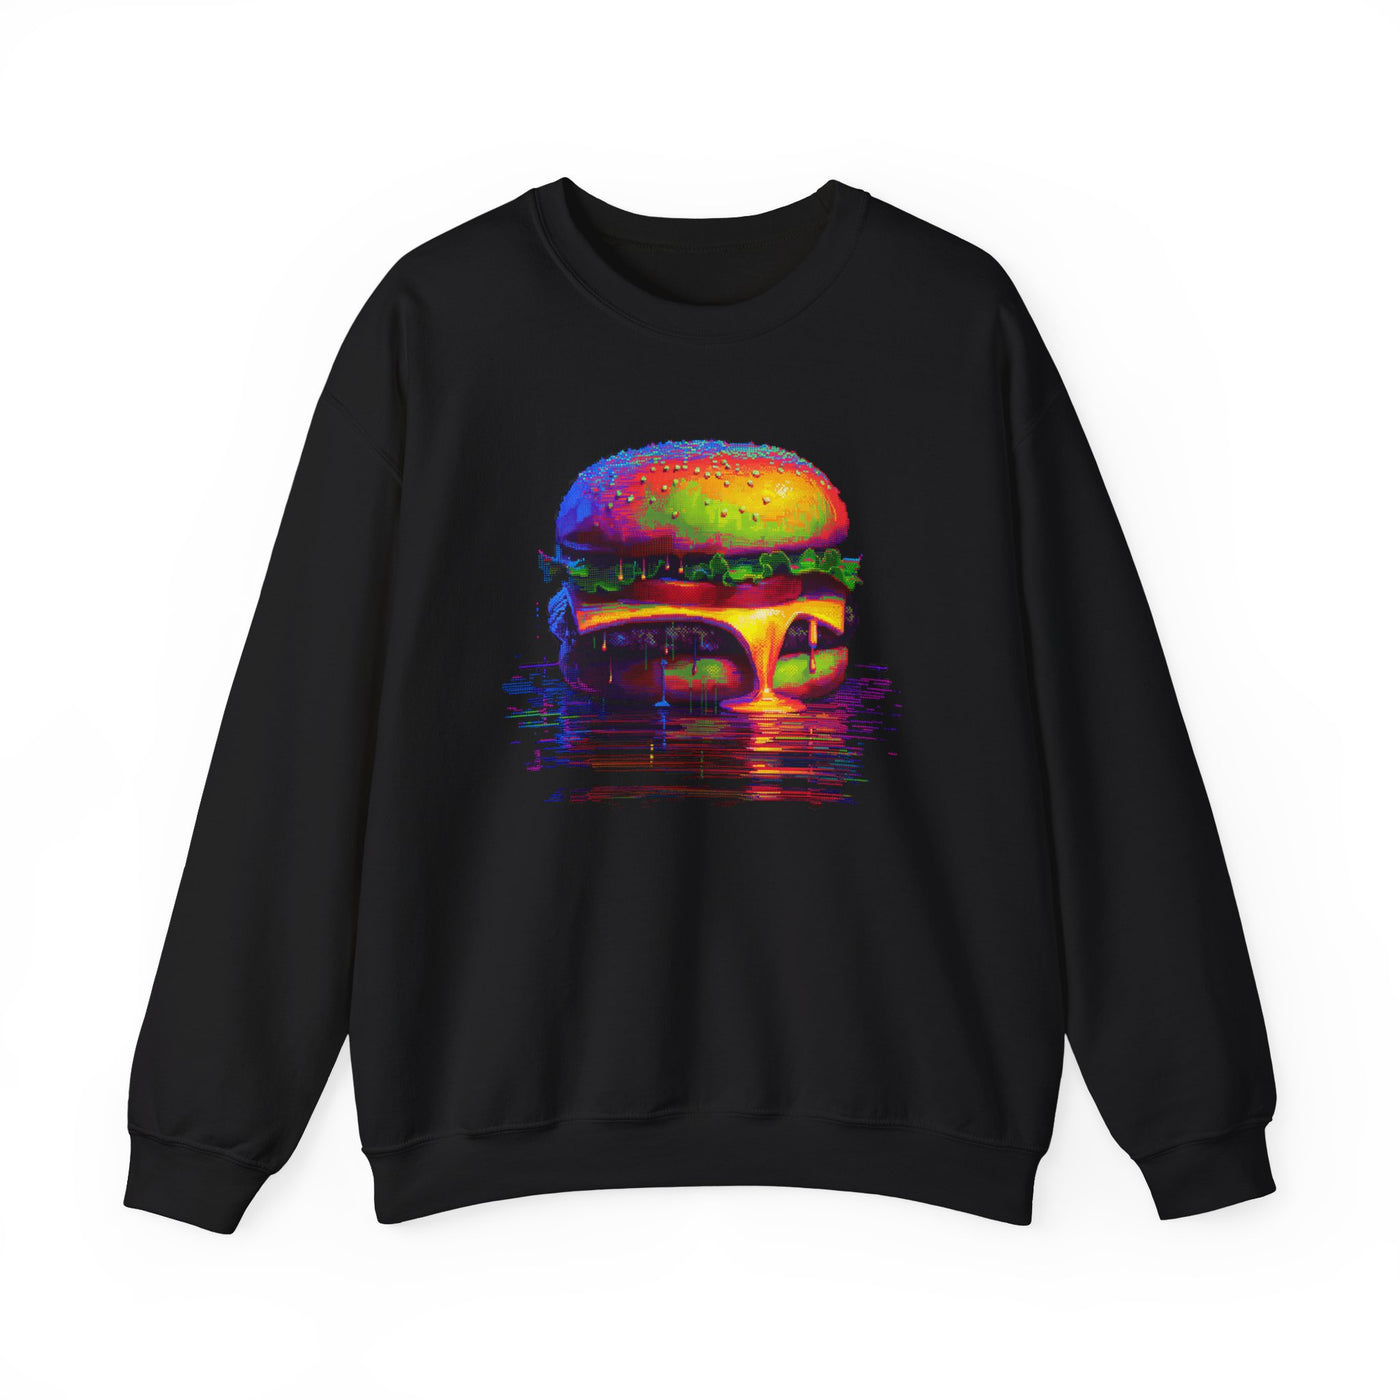 Glitchy CTR Screen Cheeseburger Classic Sweatshirt